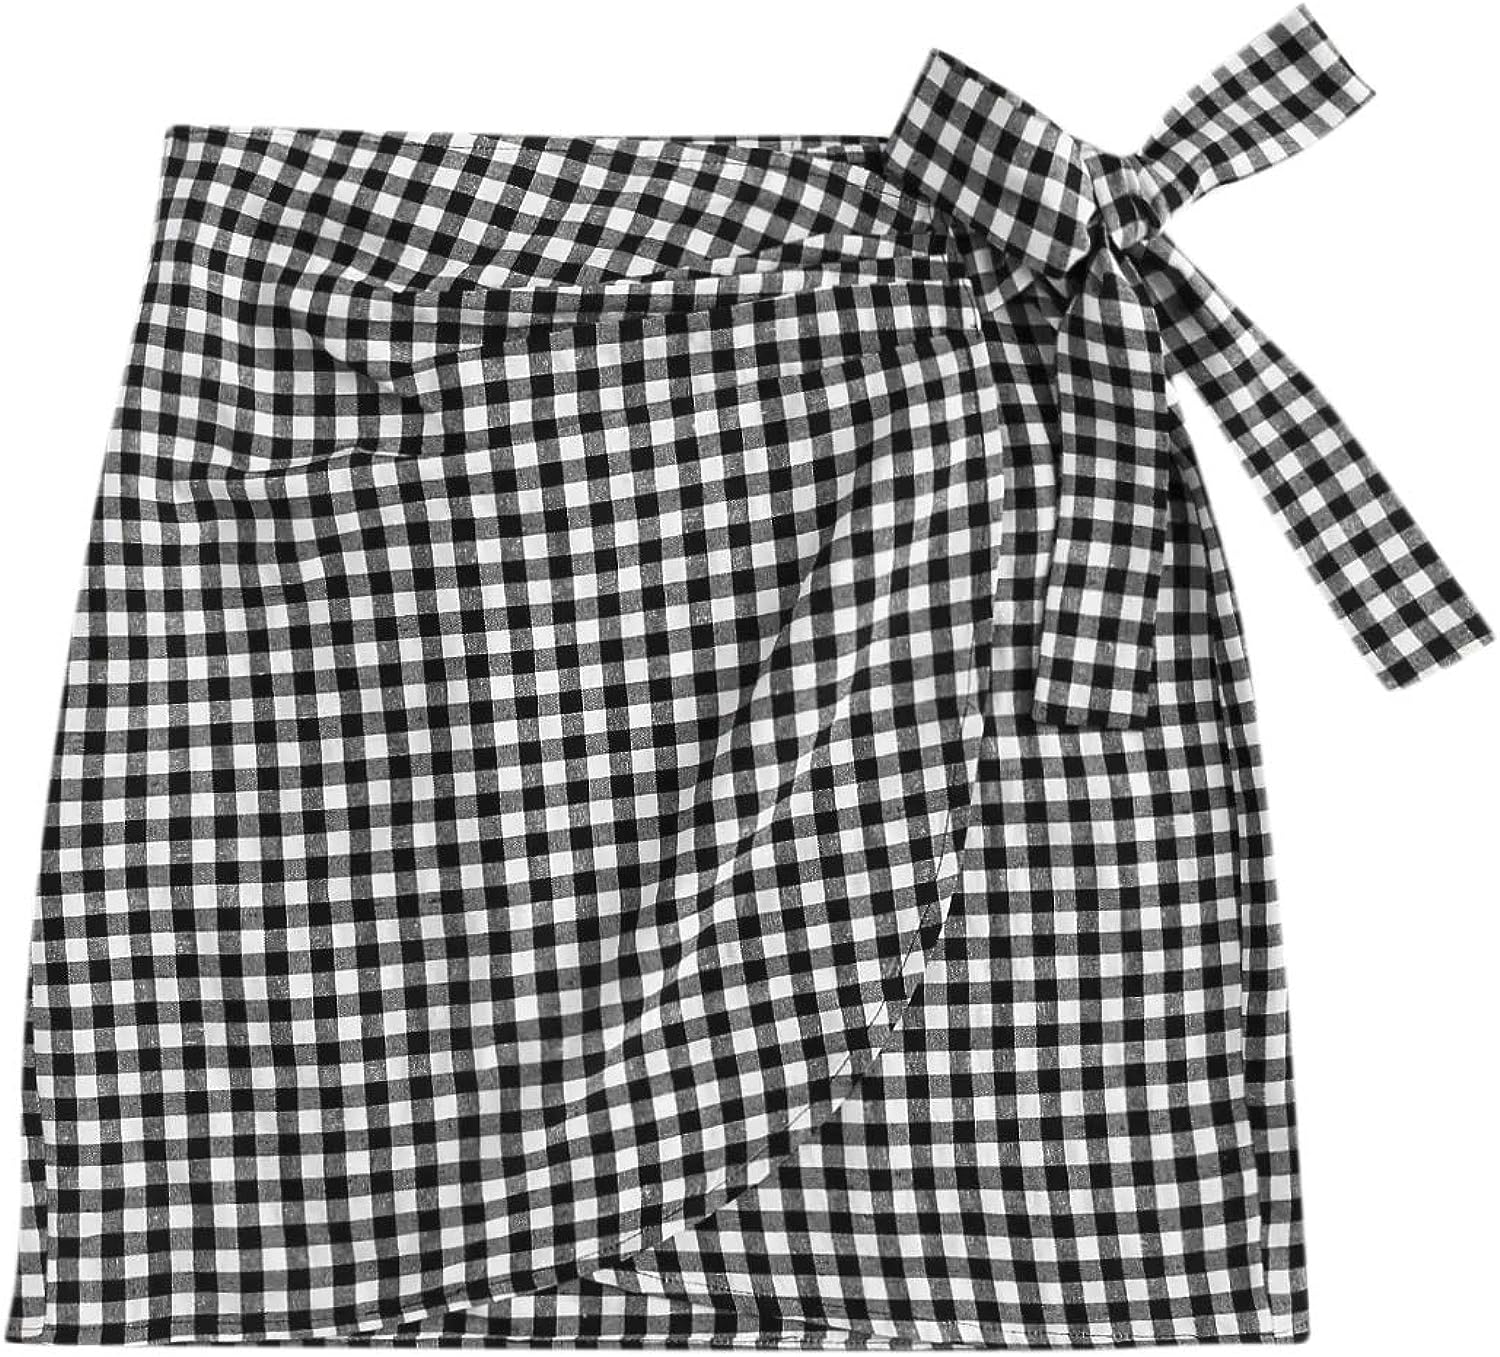 WDIRARA Women's Mid Waist Gingham Print Asymmetrical Wrap Knotted Skirt Black and White